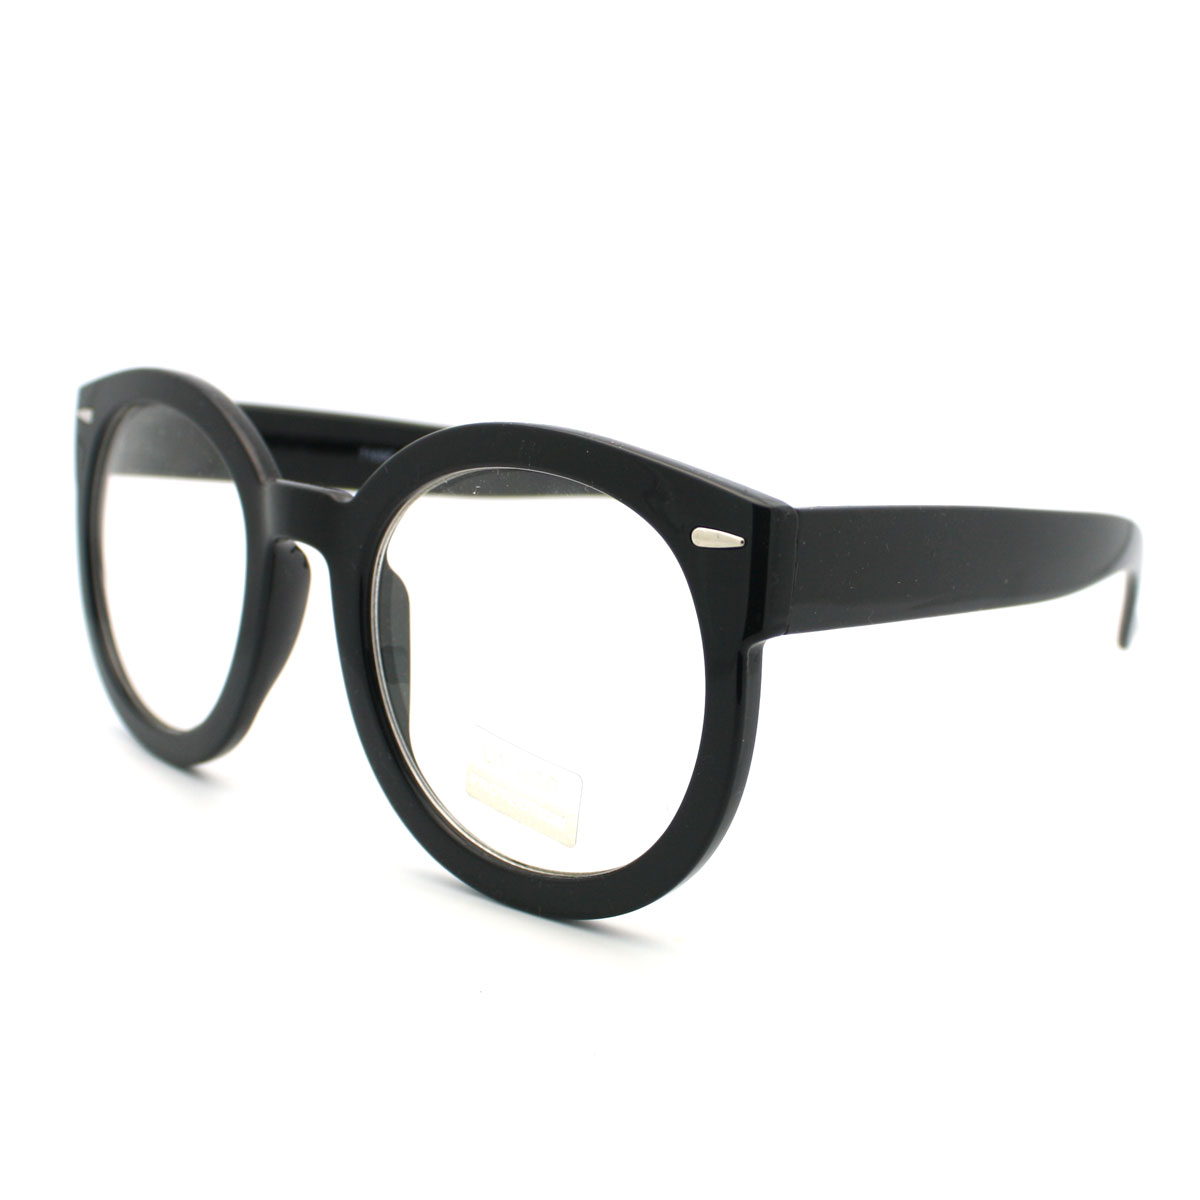 Oversized Round Thick Horn Rim Clear Lens Fashion Eye Glasses Frame Black - image 2 of 3